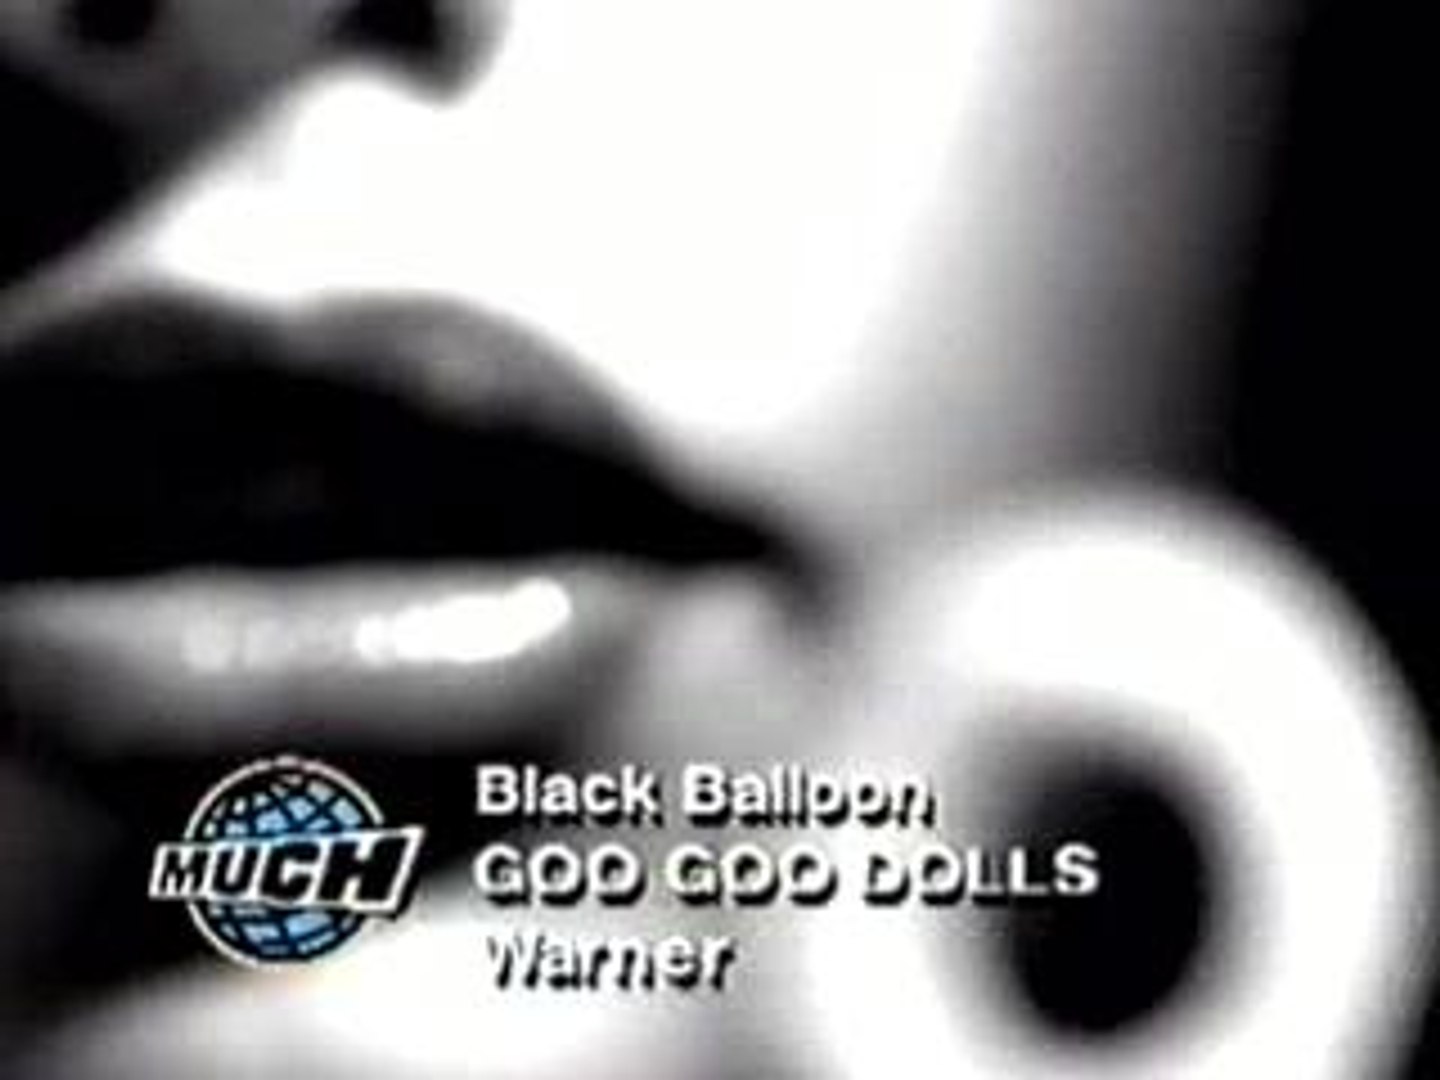 Goo Goo Dolls - Black Balloon - video Dailymotion